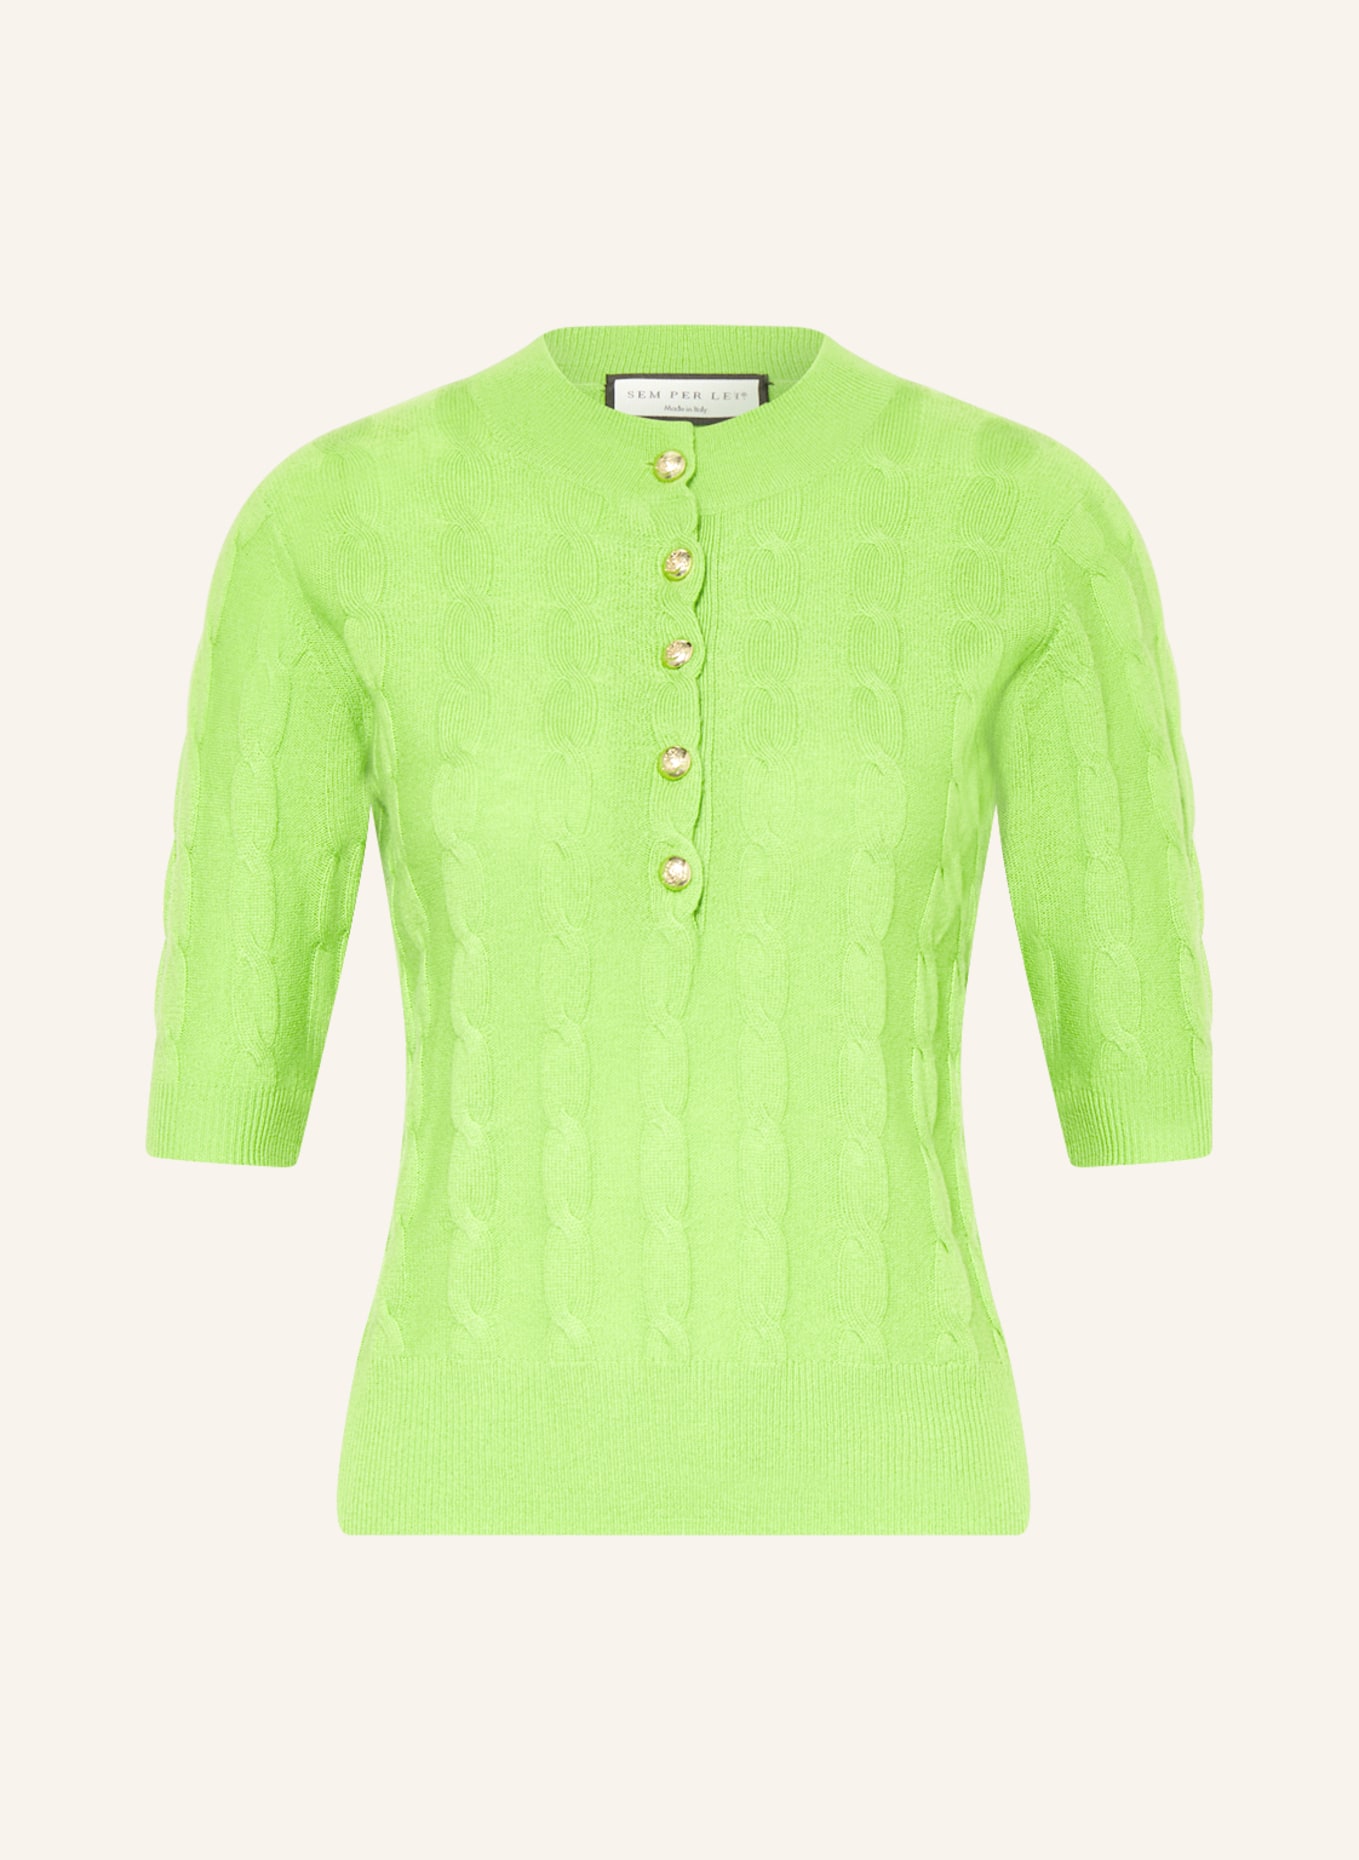 SEM PER LEI Pullover mit Cashmere, Farbe: HELLGRÜN (Bild 1)